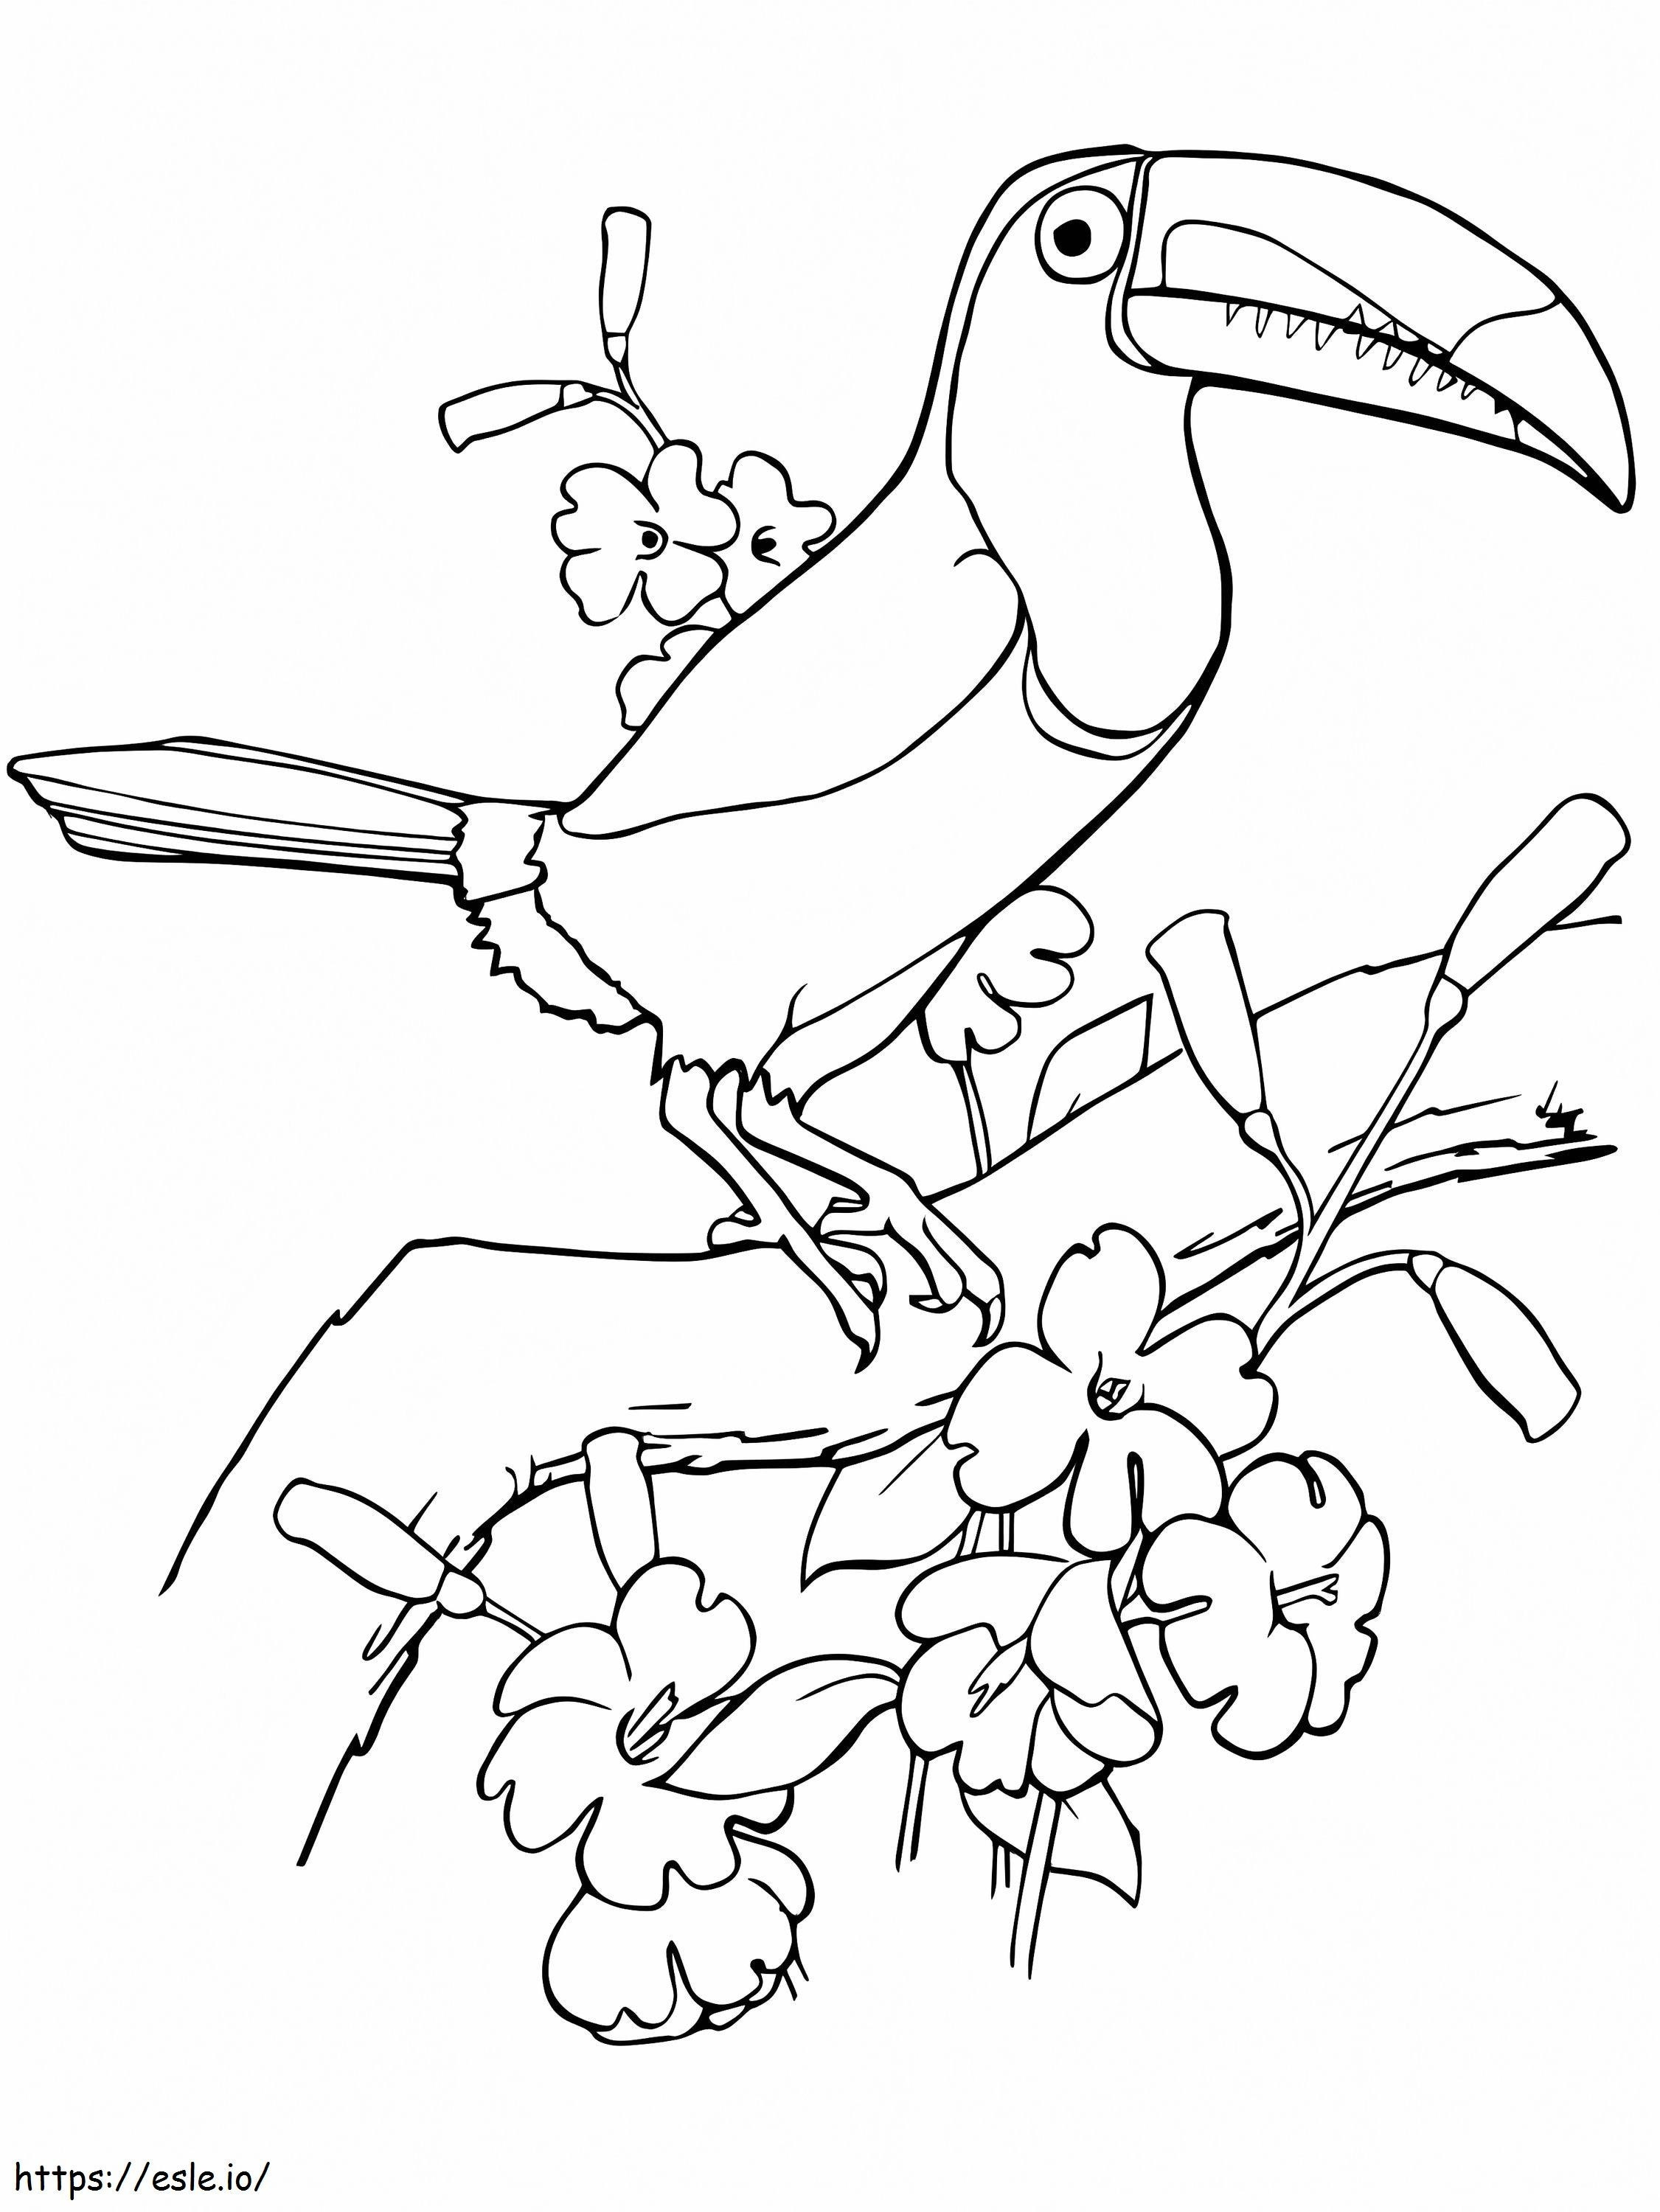 Tukanvogel mit Kielschnabel ausmalbilder